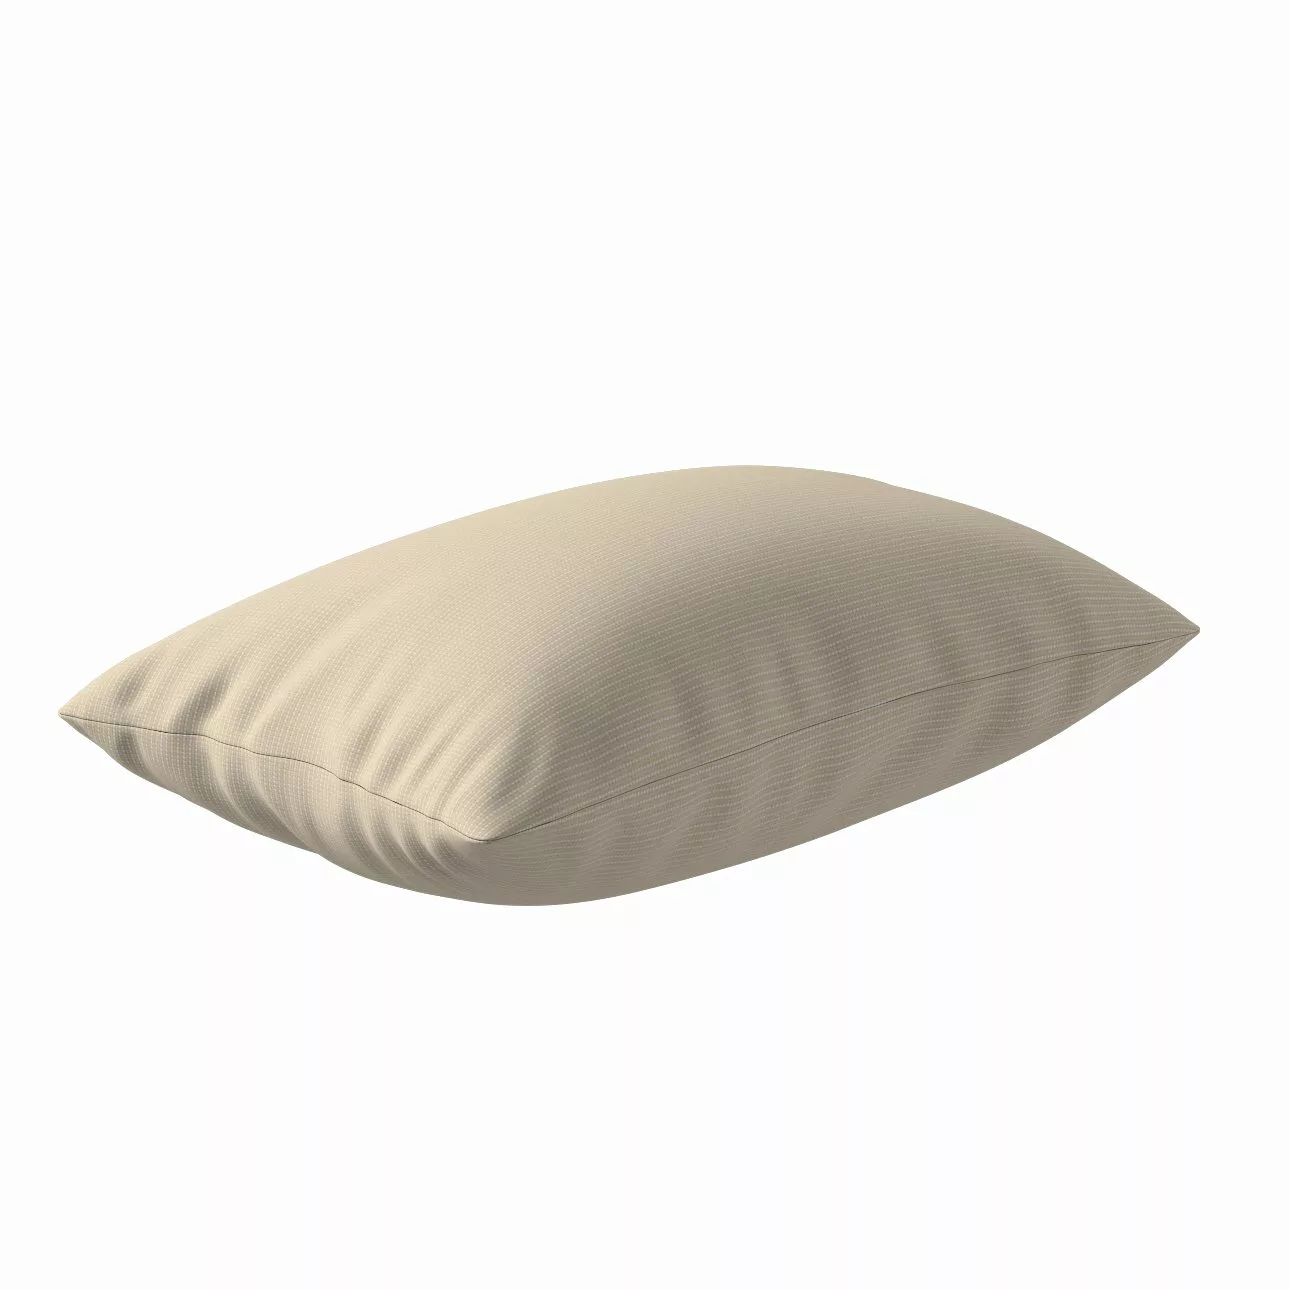 Kissenhülle Kinga rechteckig, beige-creme, 47 x 28 cm, Outdoor Oasis (703-3 günstig online kaufen